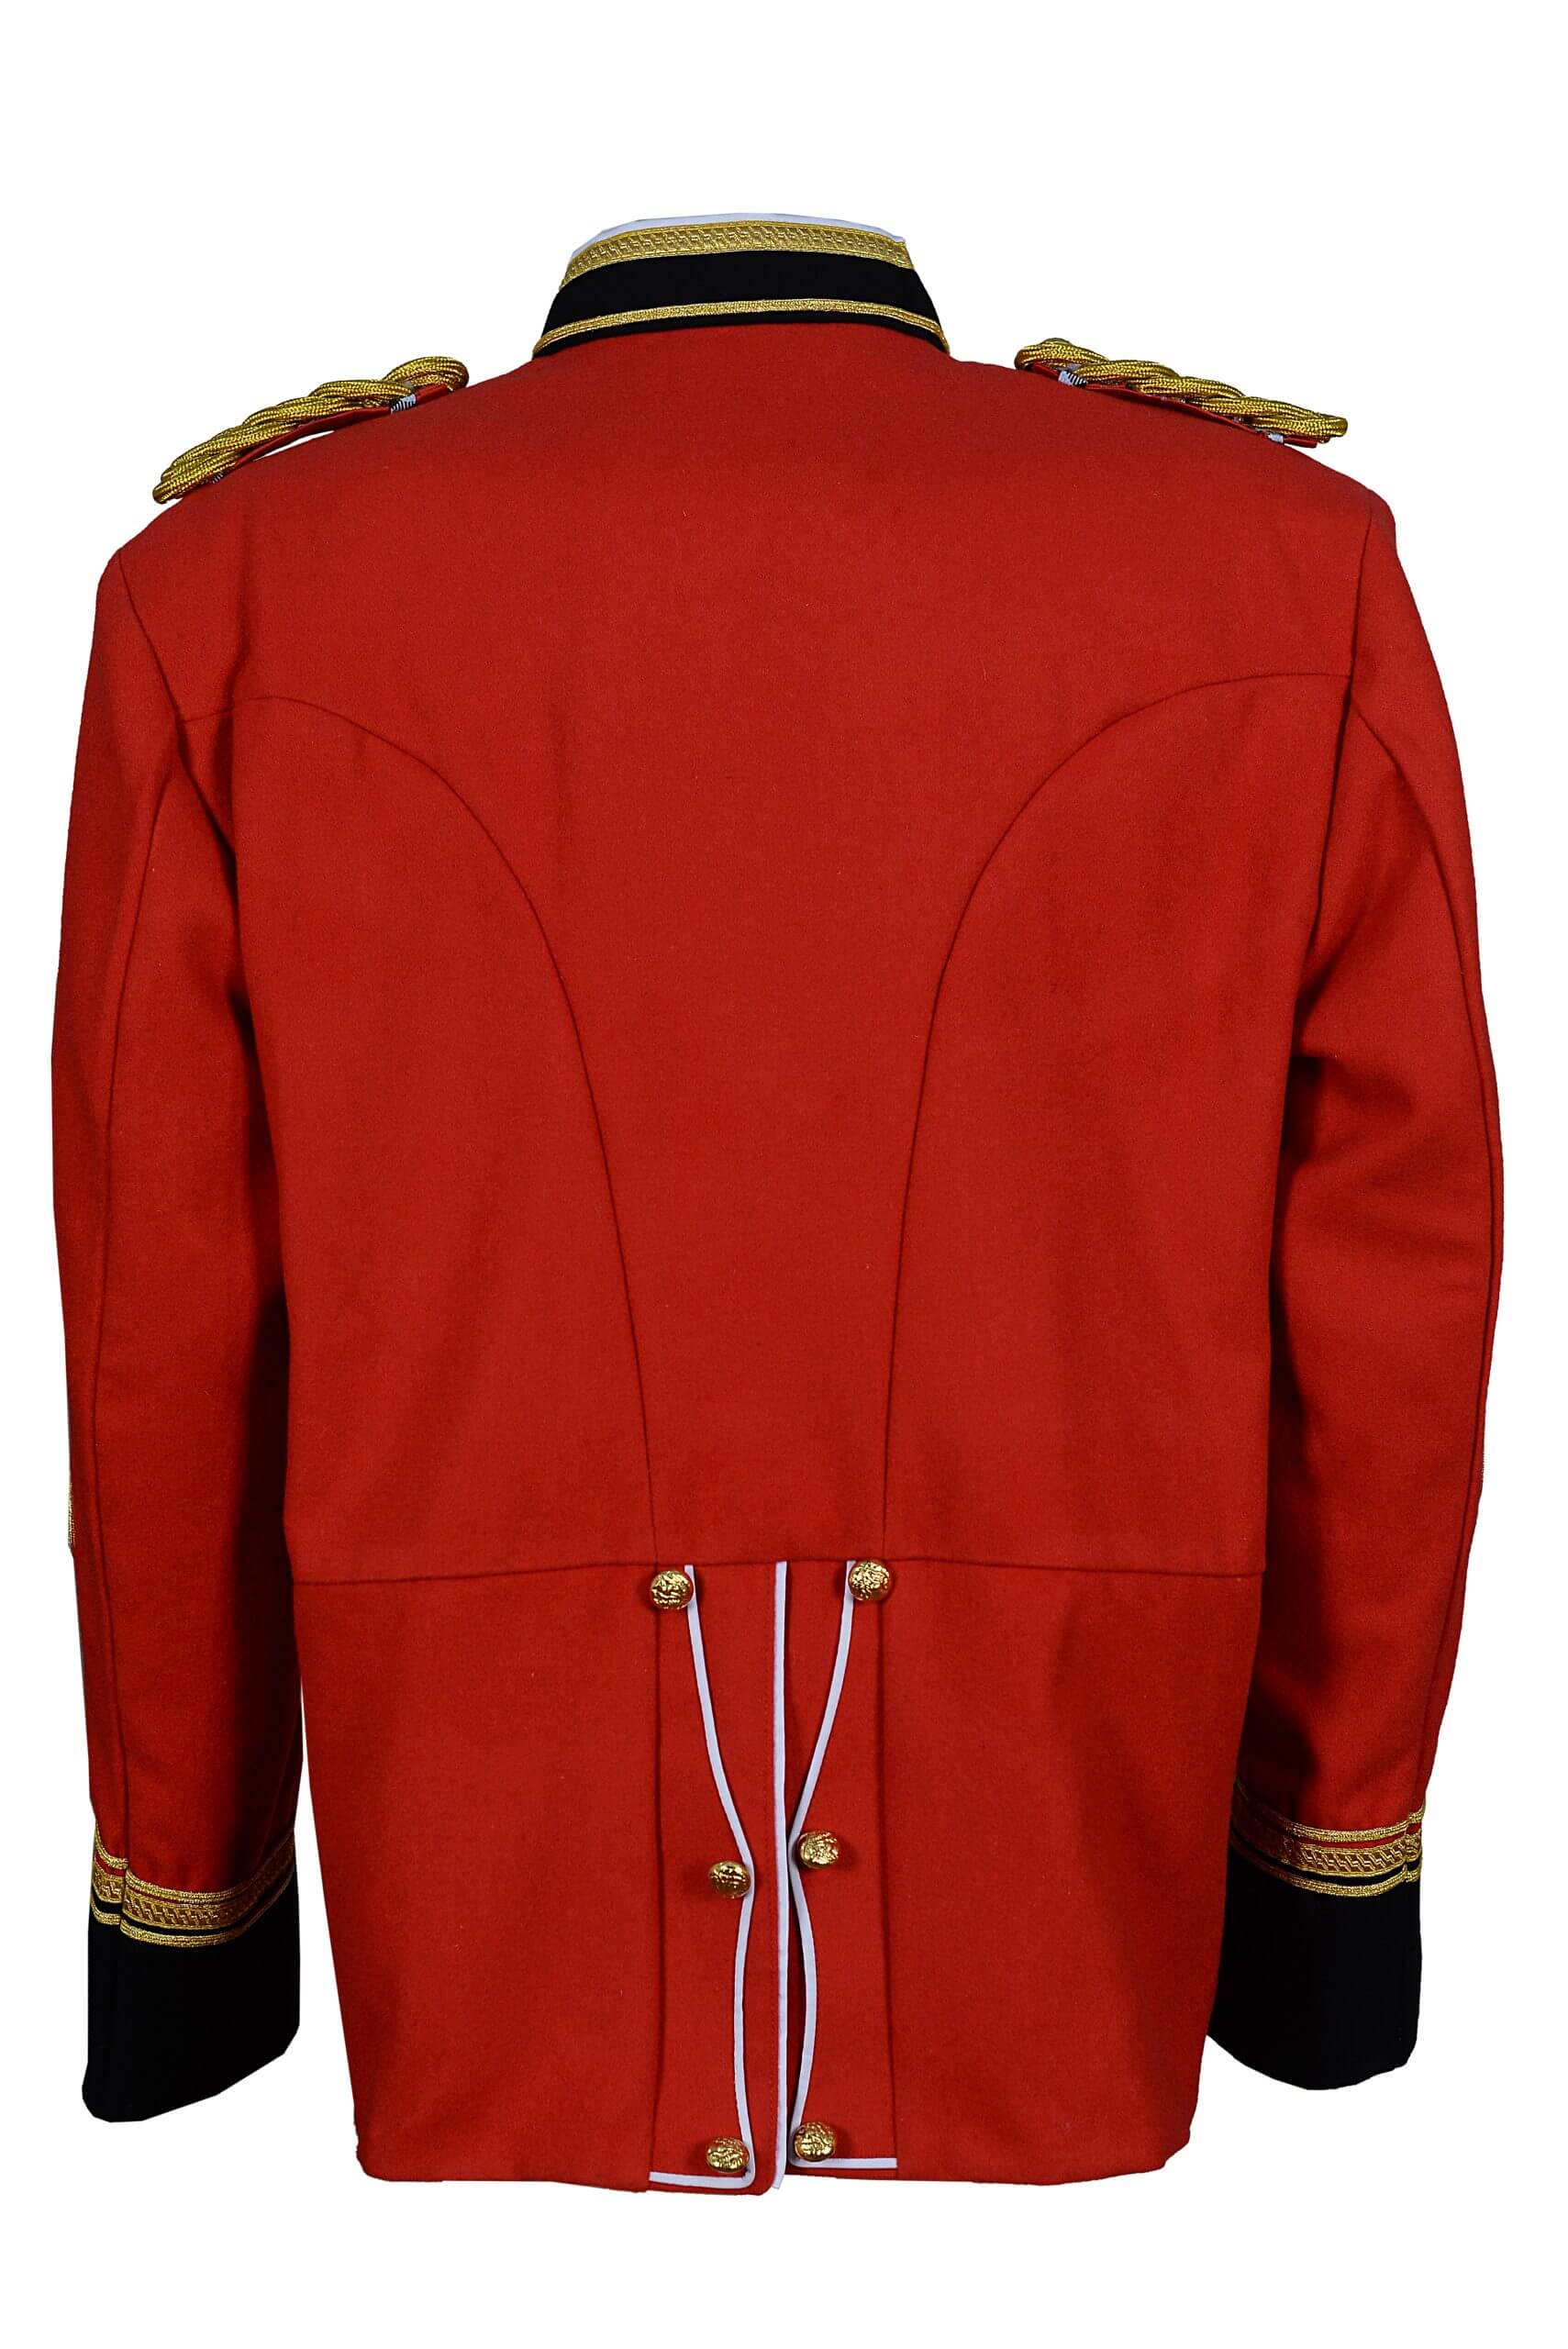 1879 British Anglo Zulu War Officers Tunic Circa Jacket2